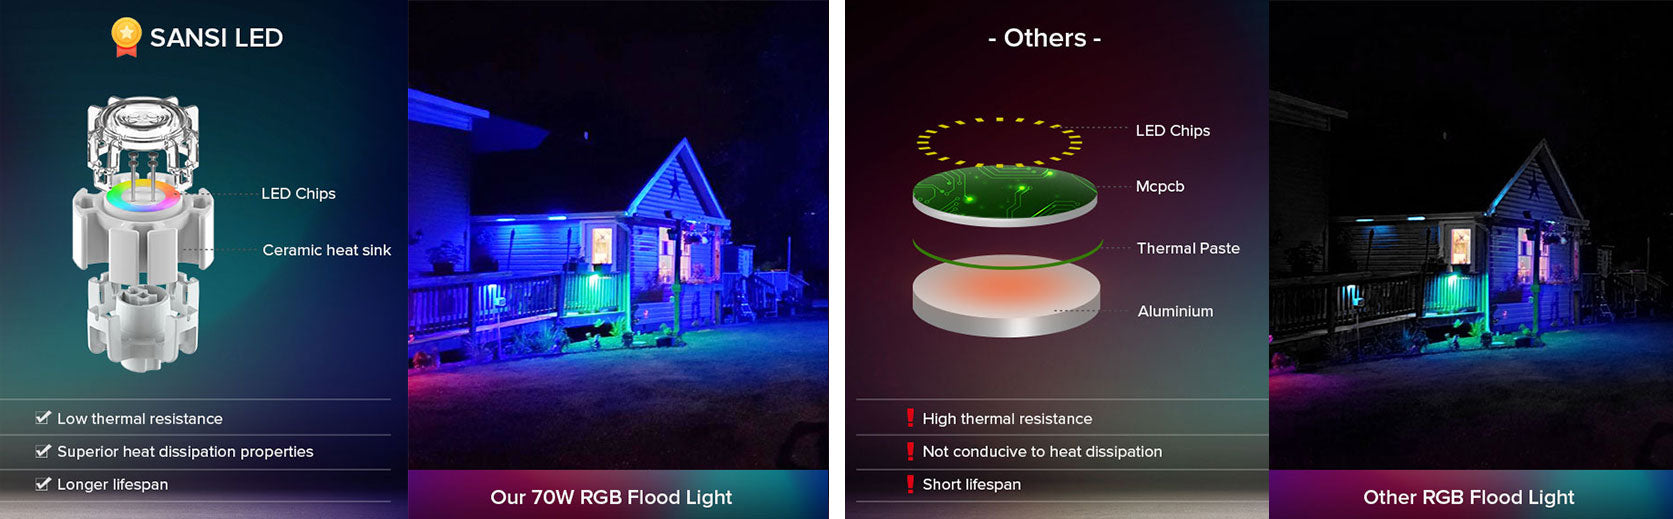 70W RGB LED Flood Light(US/CA ONLY)